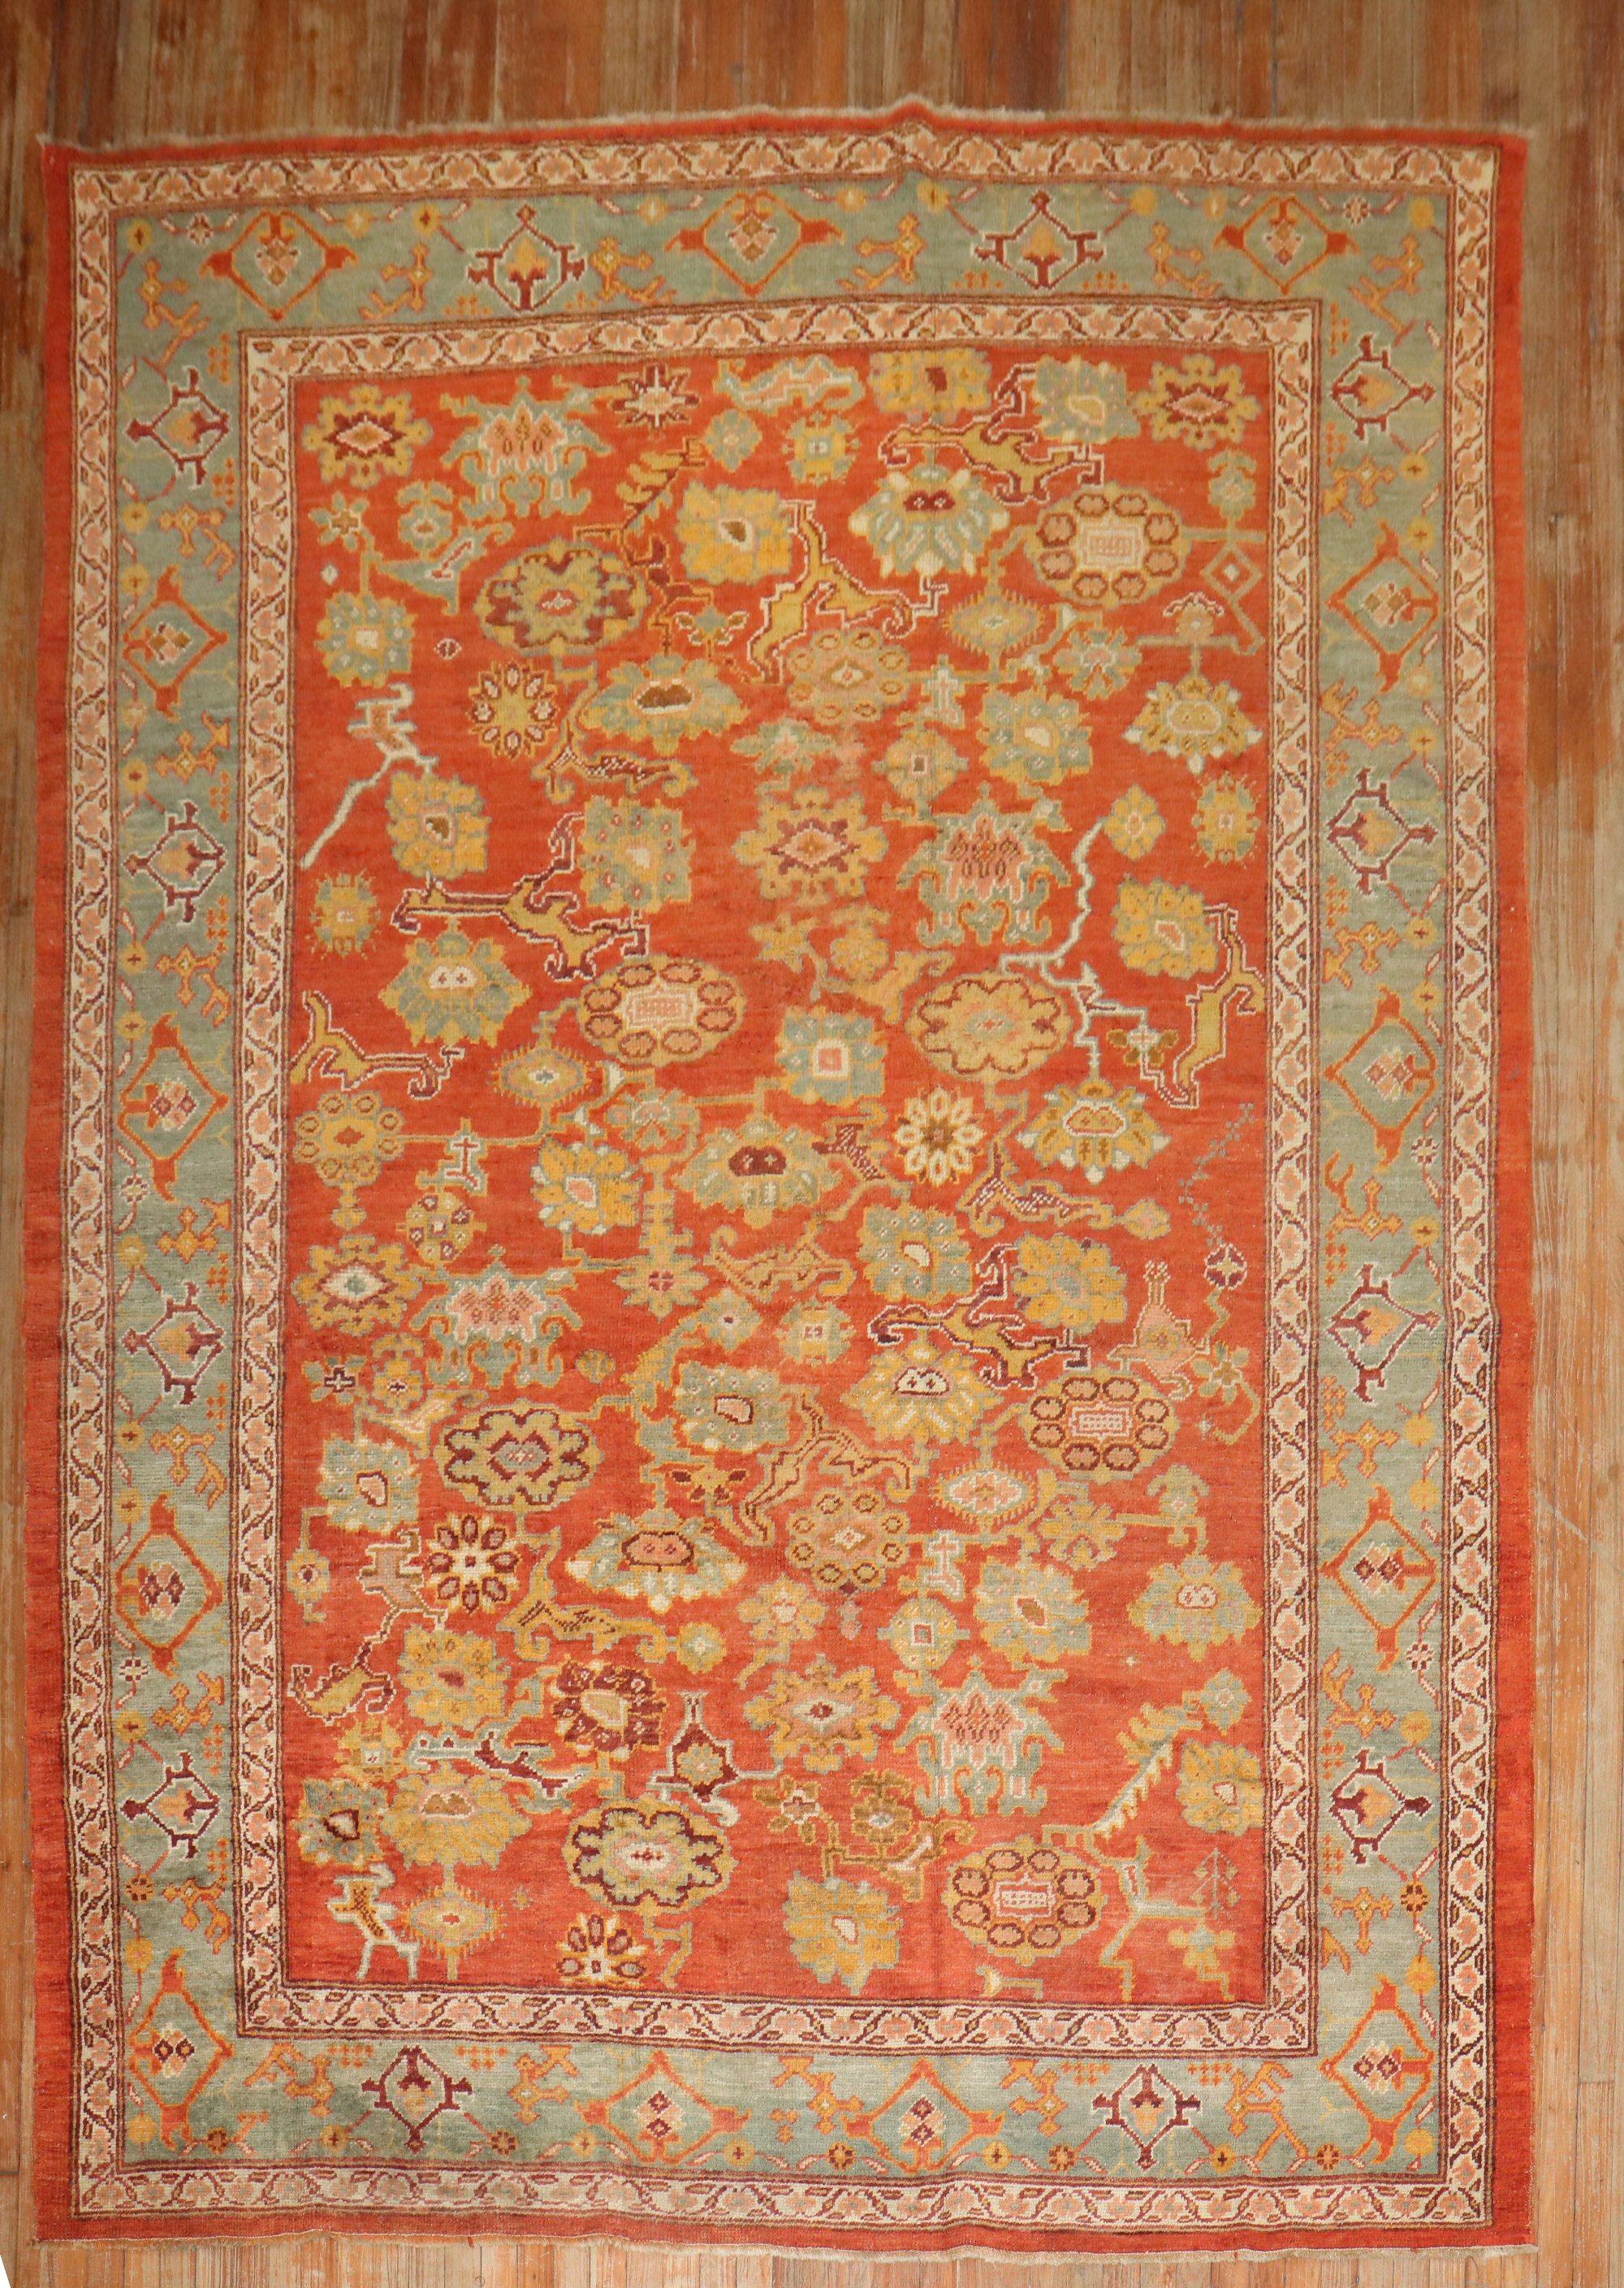 Description
an early 20th Century Antique Turkish Oushak Rug

Details
rug no.	j3467
size	7' 10